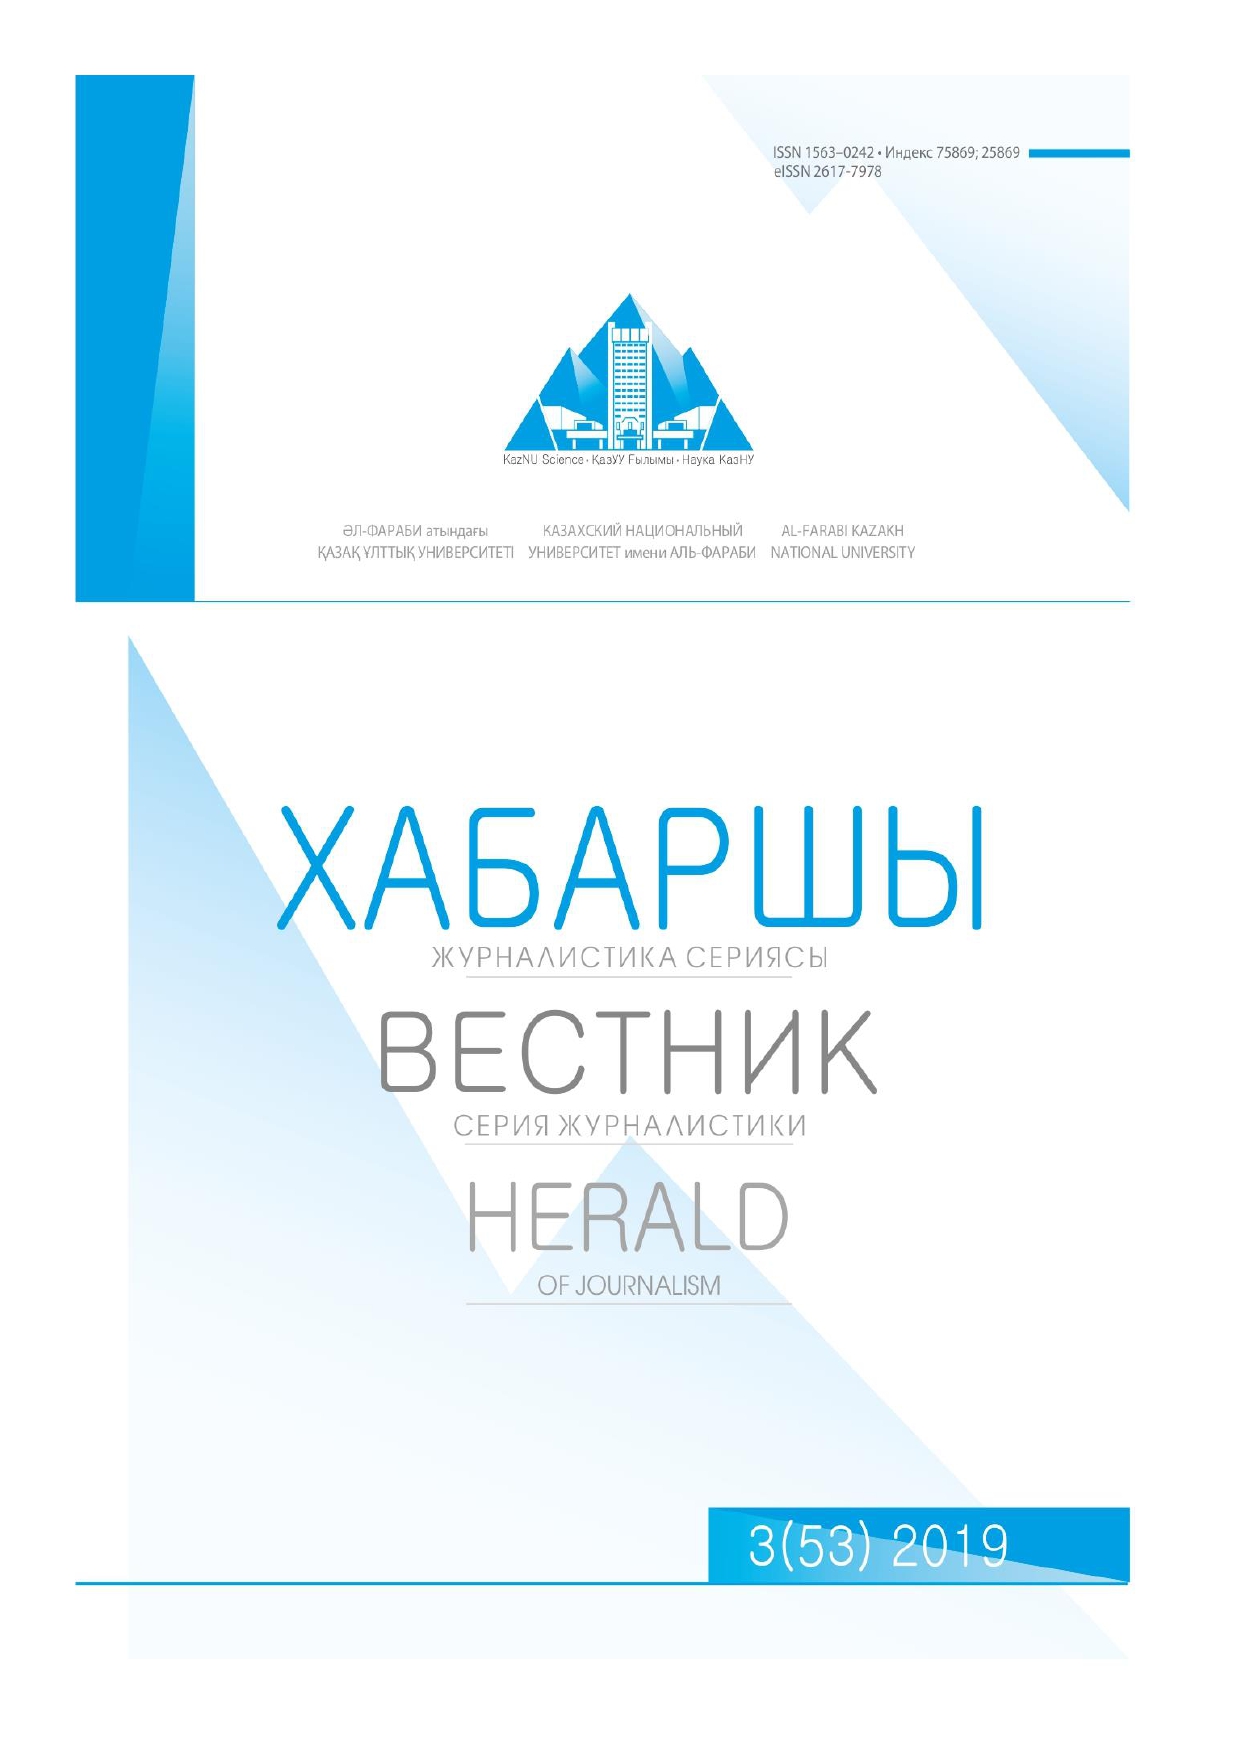 					View Vol. 53 No. 3 (2019): Al-Farabi kazakh national university. Herald of journalism
				